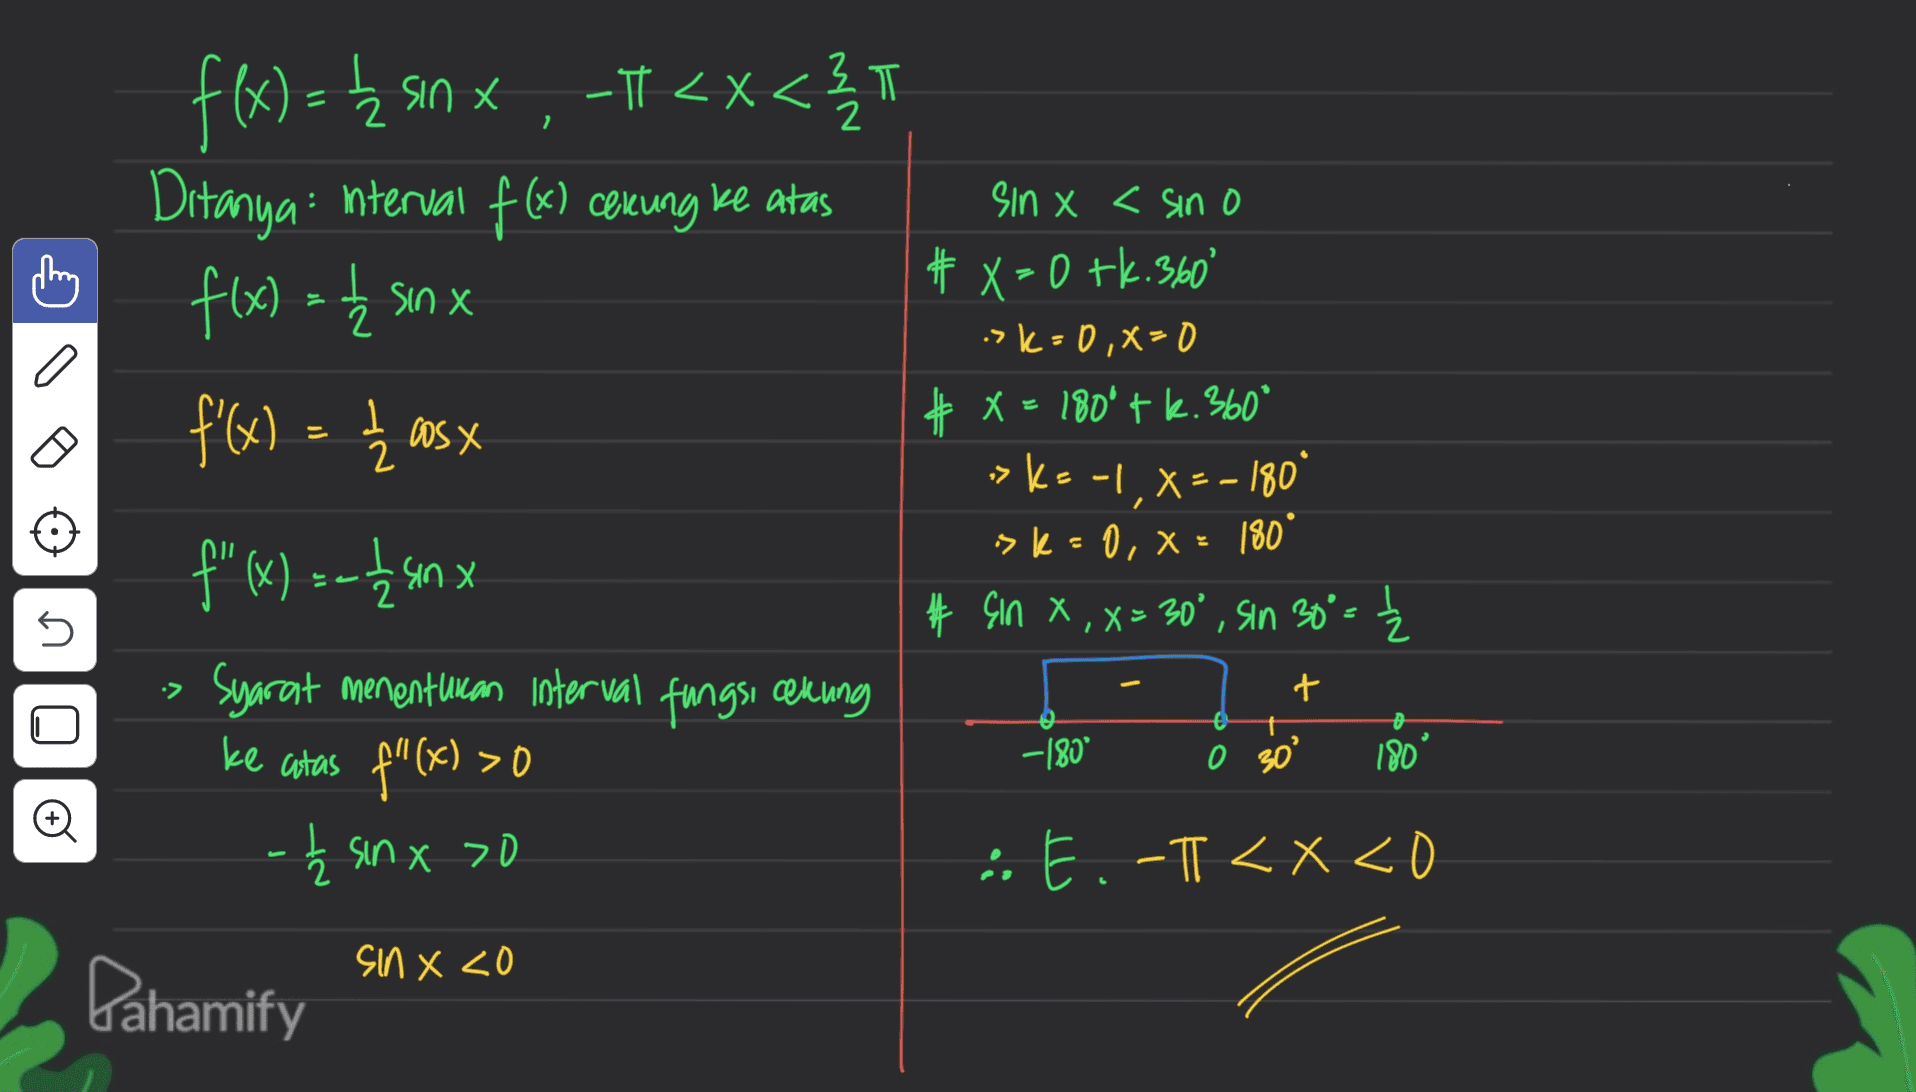 14>x>H-' x US? =(x)f 루 3 T X x Ditanya interval f(x) cekung ke atas f(x) = sinx Ź f'(x) = 12 asx b . o sin x < sino # X=0 tk. 360° >k=0, x=0 # X = 180° + k.360° ->Ke -1 X=-180 >k=0, x= 180 # Çin X ,x= 30°, sin 30°= xus4=(x),ut 5 •> t o o -180° 0 30° 180 Syarat menenturan interval fungsi cekung ke atas f"(x) >0 - Ź sinx >0 > E.-T <x<0 SINX ZO Pahamify 